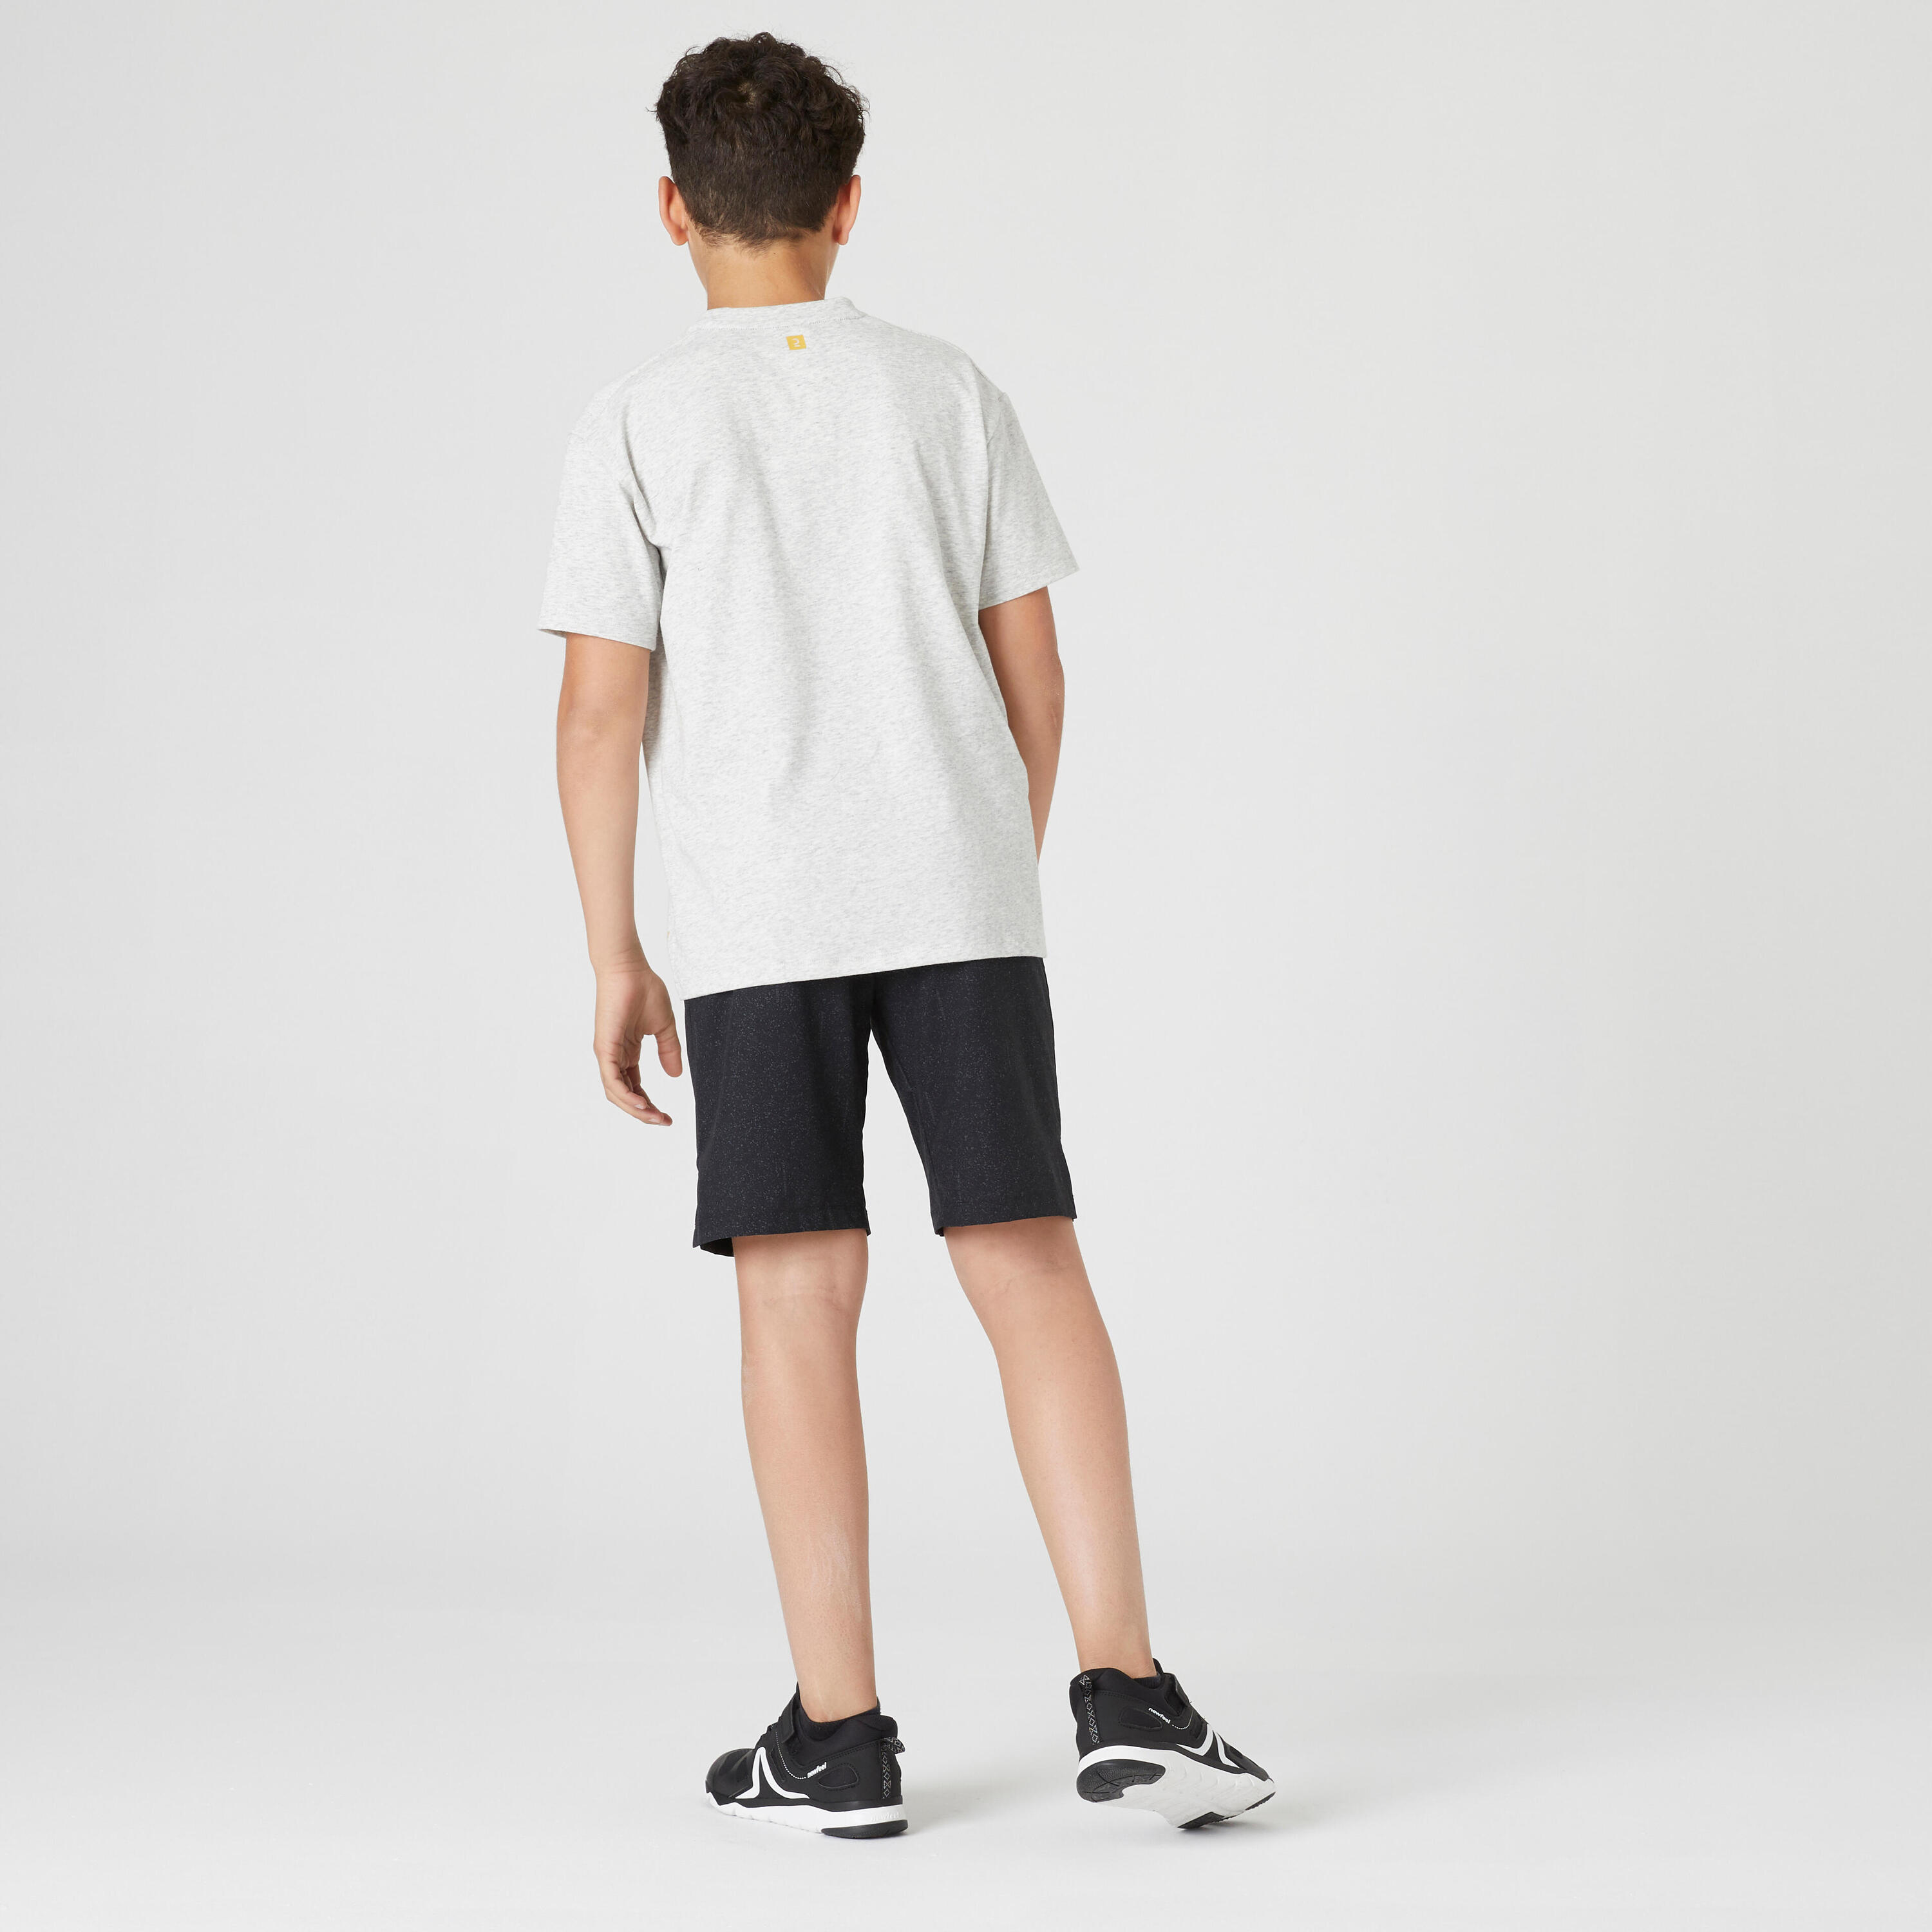 Kids' Breathable Cotton T-Shirt 500 - Light Grey 4/9